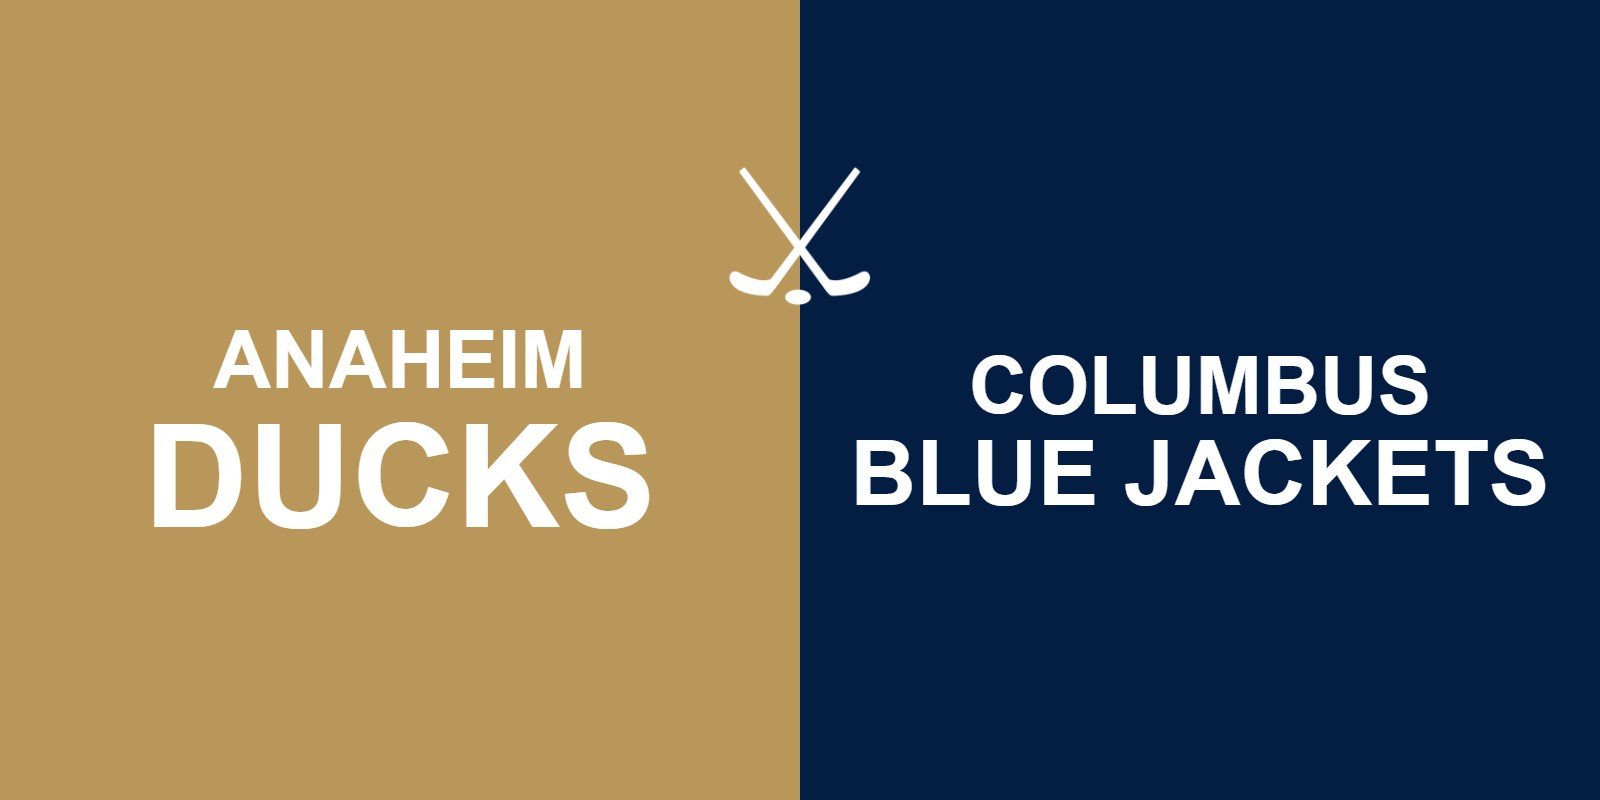 Ducks vs Blue Jackets